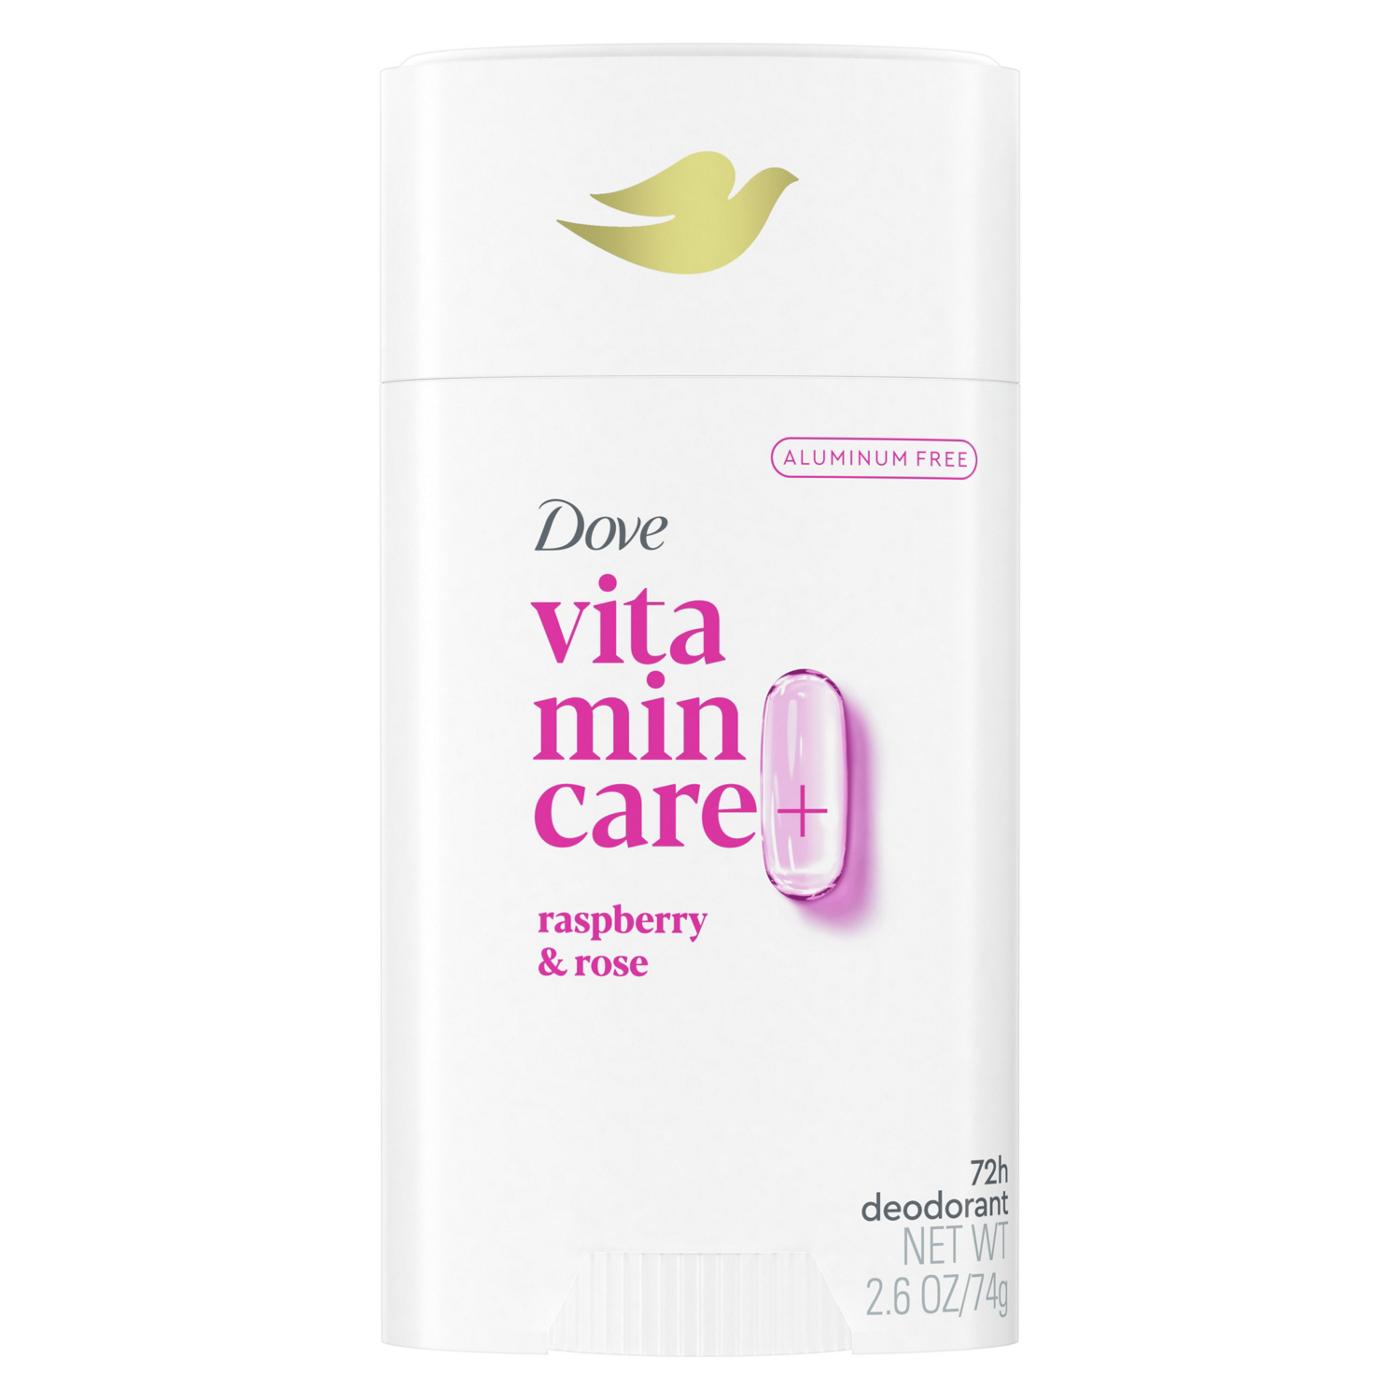 Dove Vitamin Care+ Deodorant - Raspberry & Rose; image 1 of 2